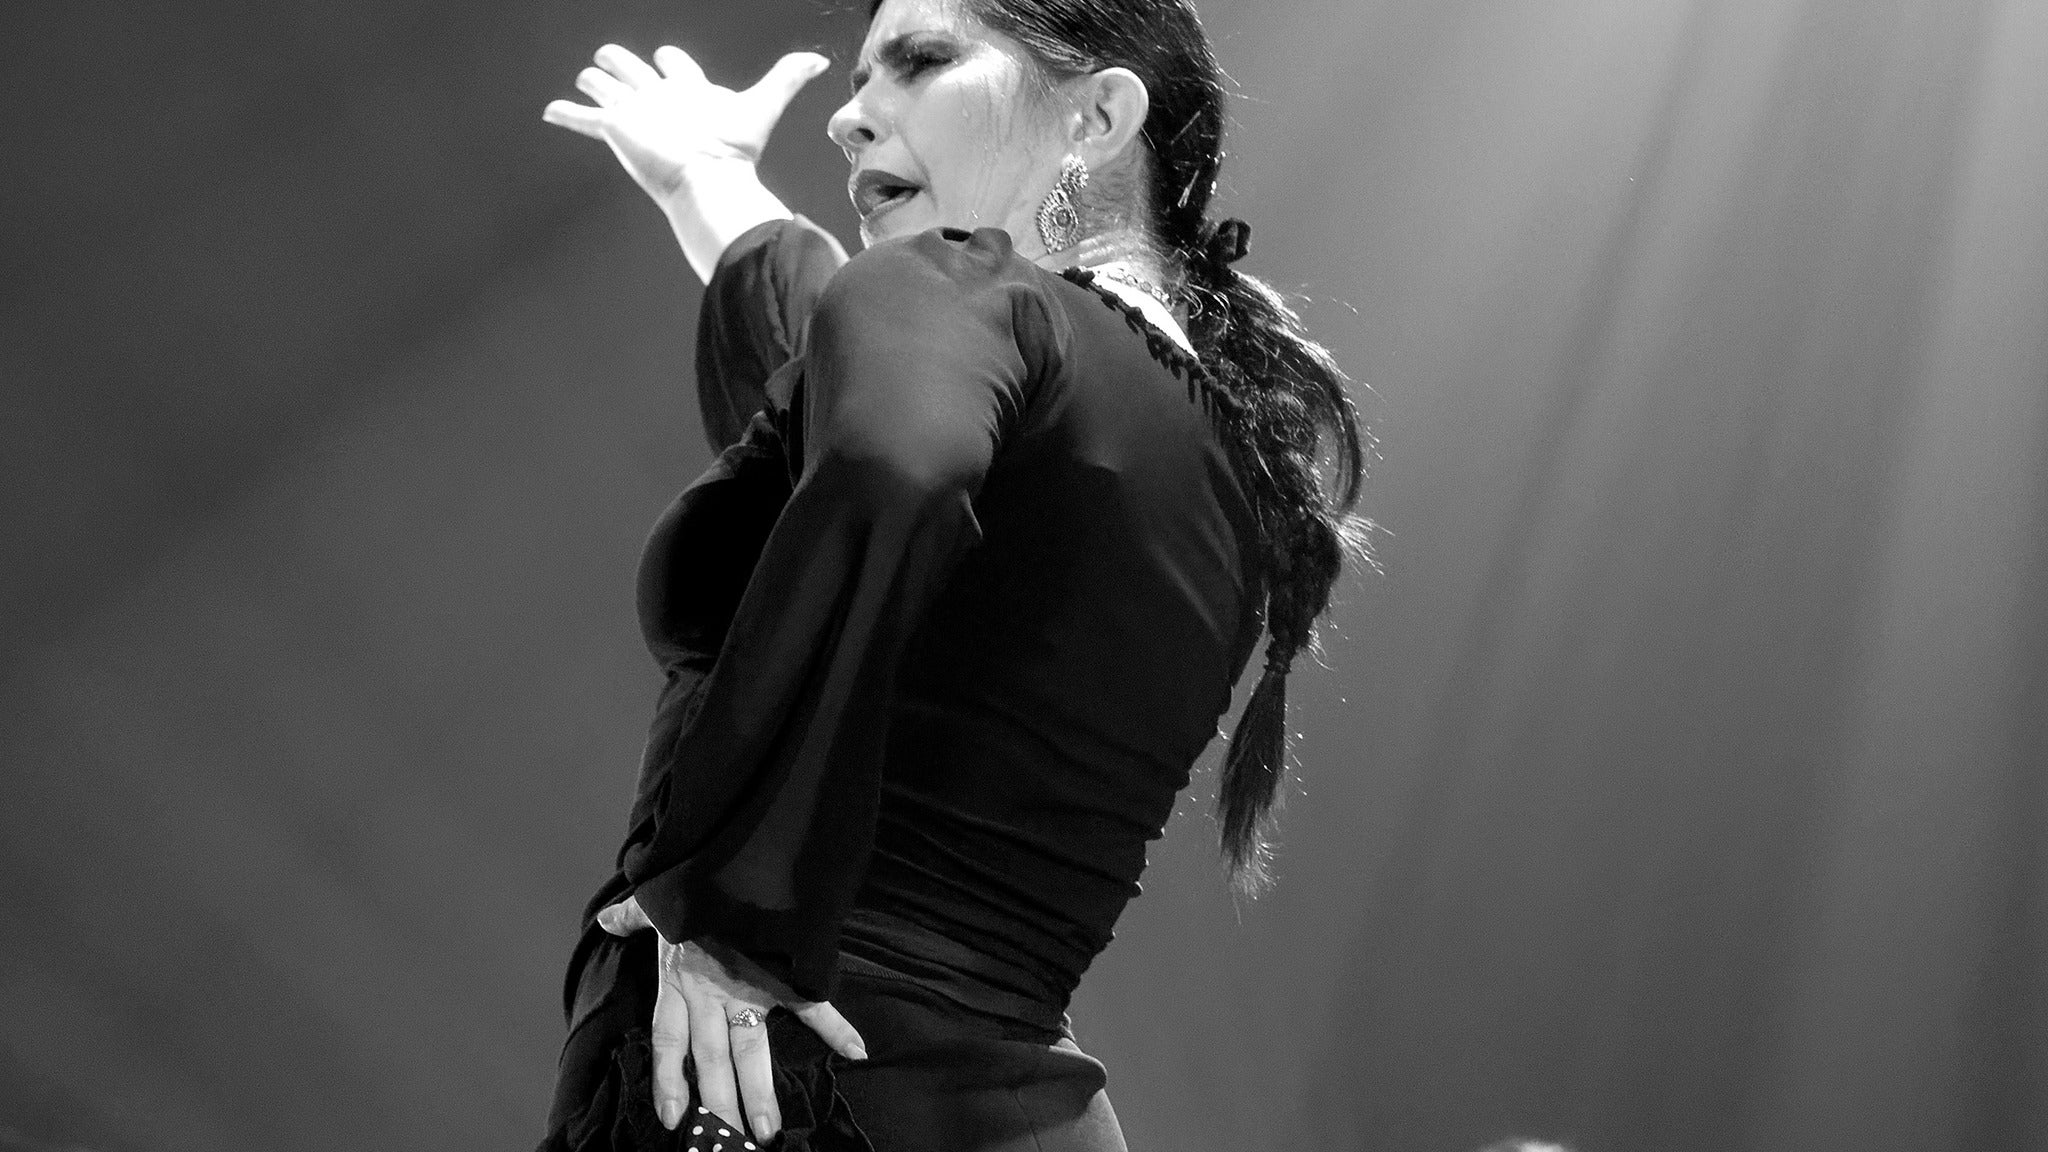 Momentos Flamencos avec Rosanne Dion presale information on freepresalepasswords.com